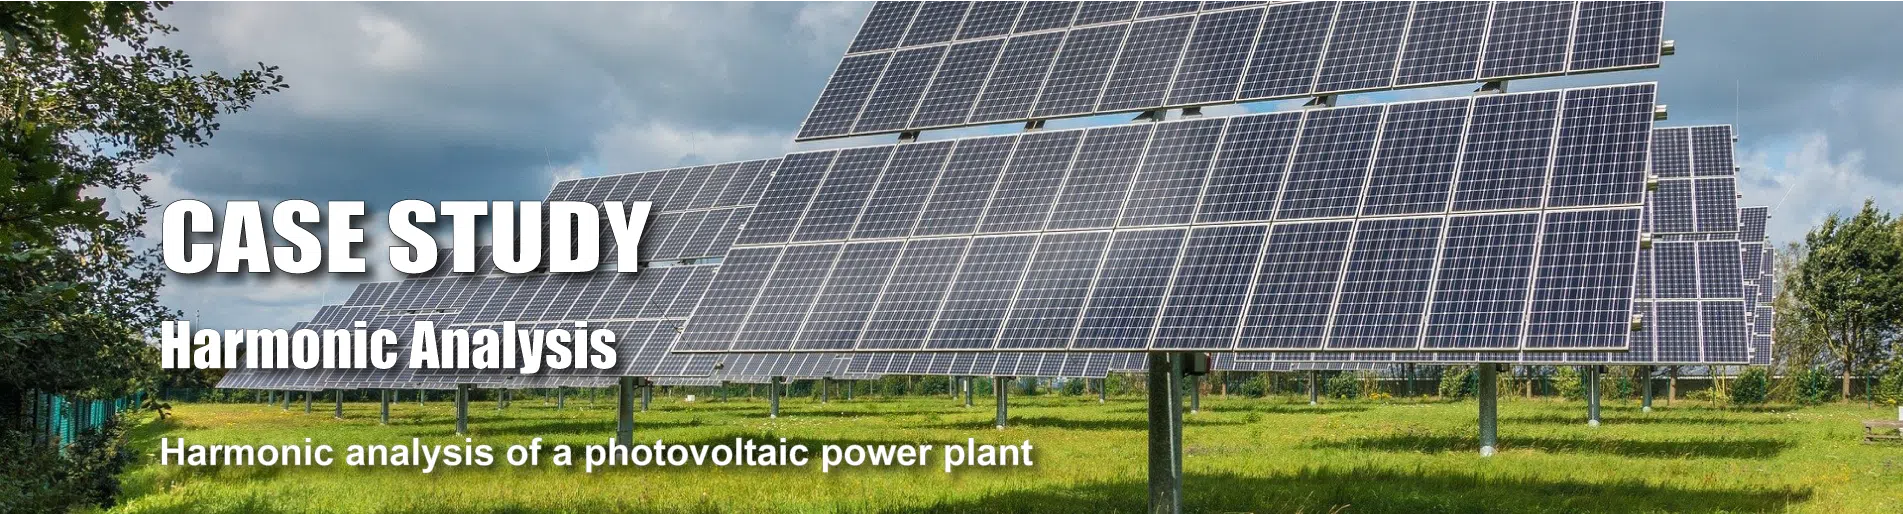 Harmonic analysis of a photovoltaic power plant